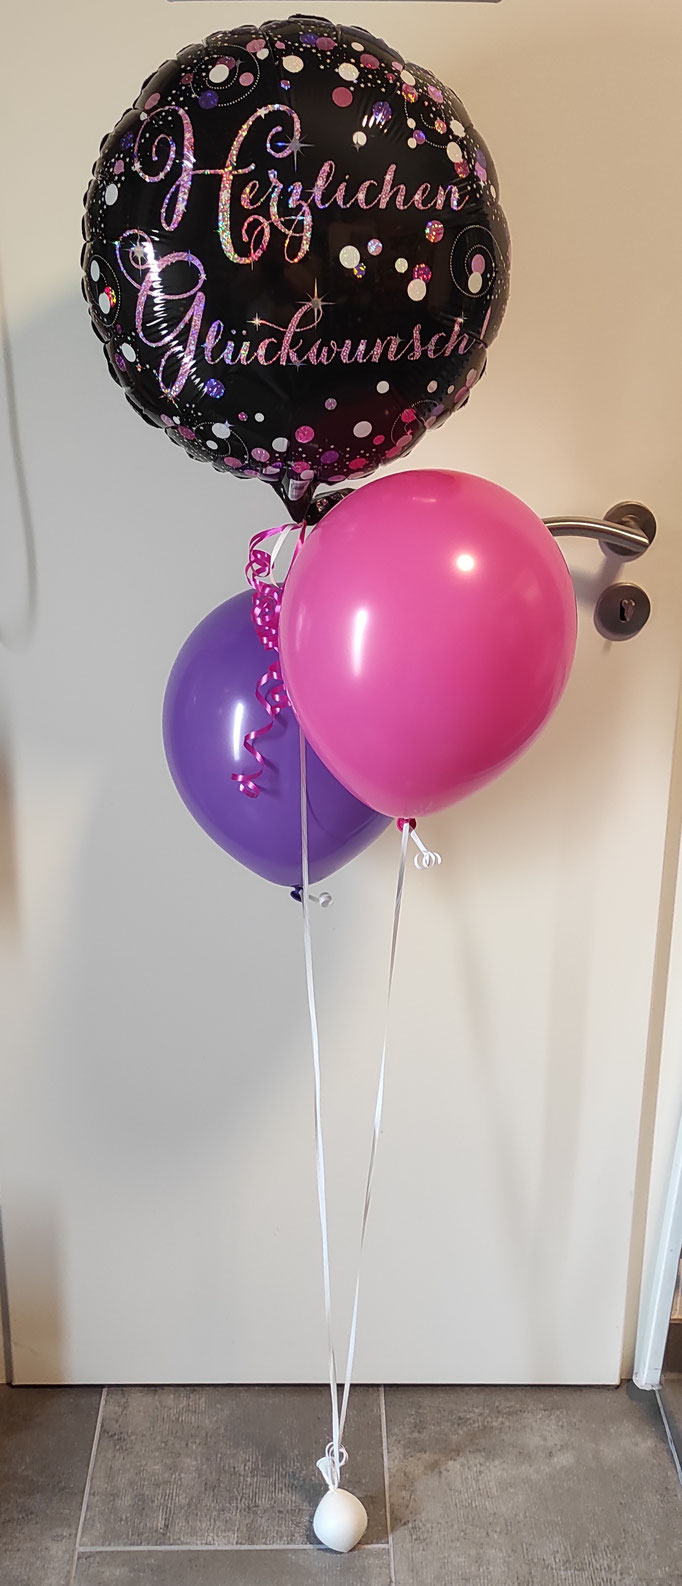 1x Motiv Folienballon 45 cm + 2x Latexballon 27,5 cm incl. Flugverlängerer  -  13,50€-   